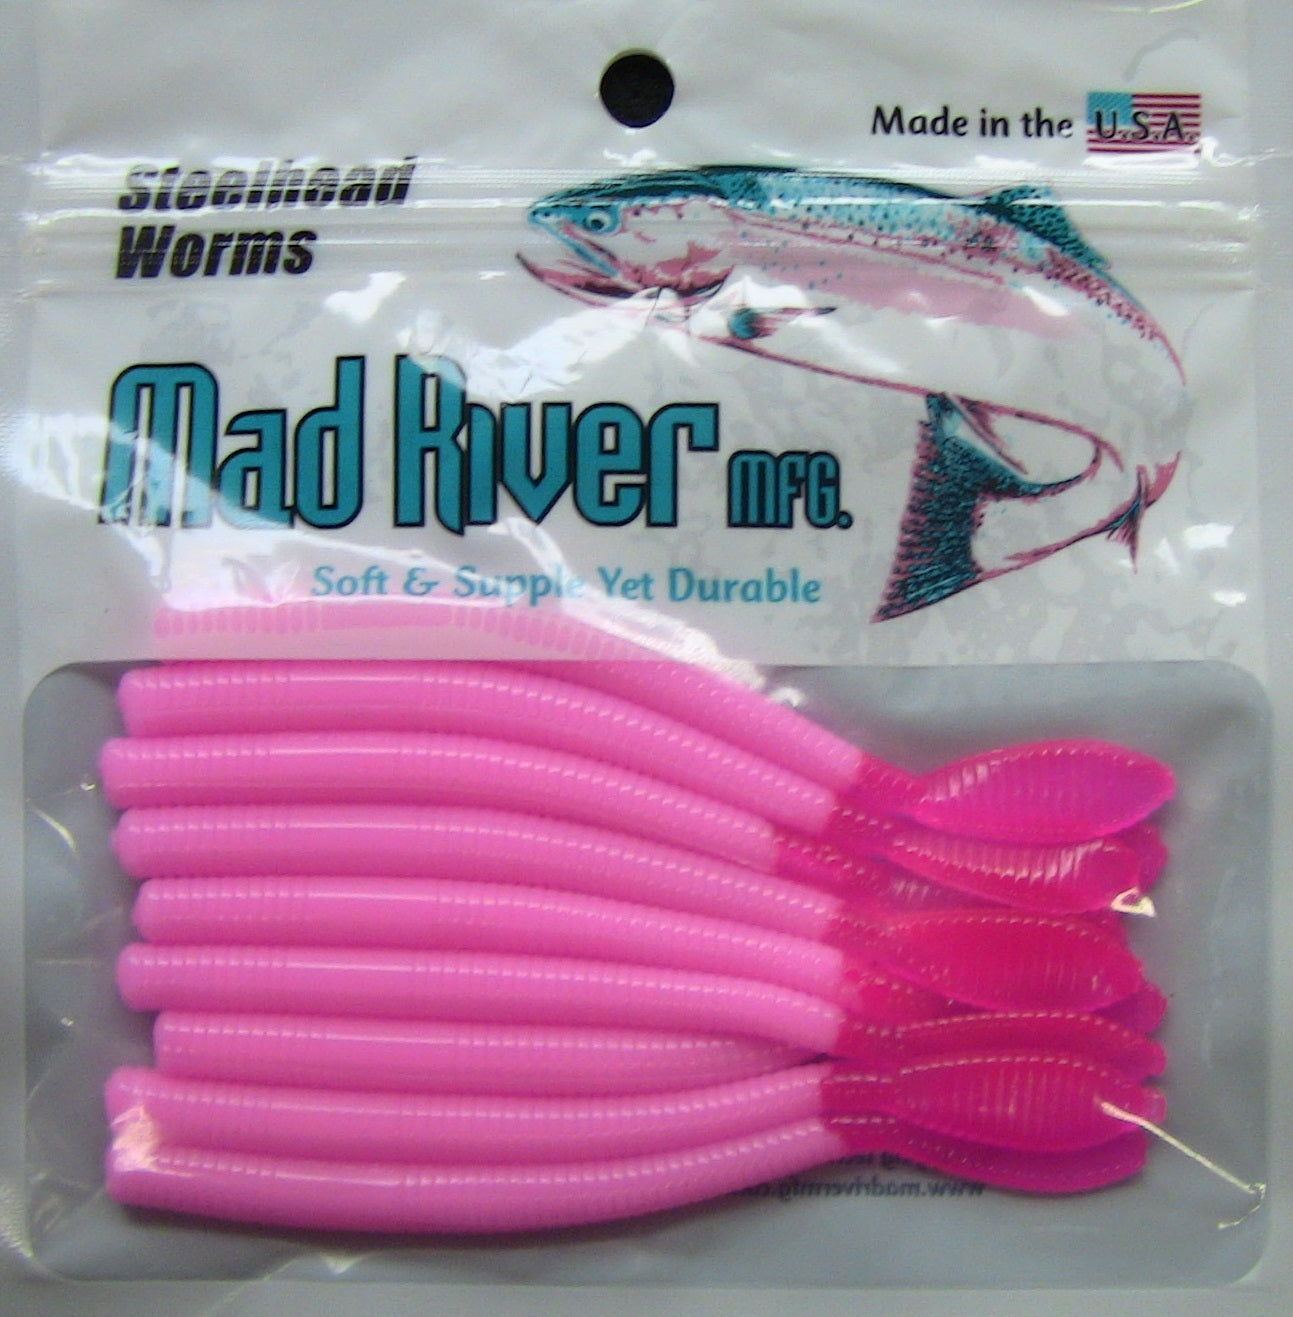 Mad River Mfg. Steelhead Worm 4